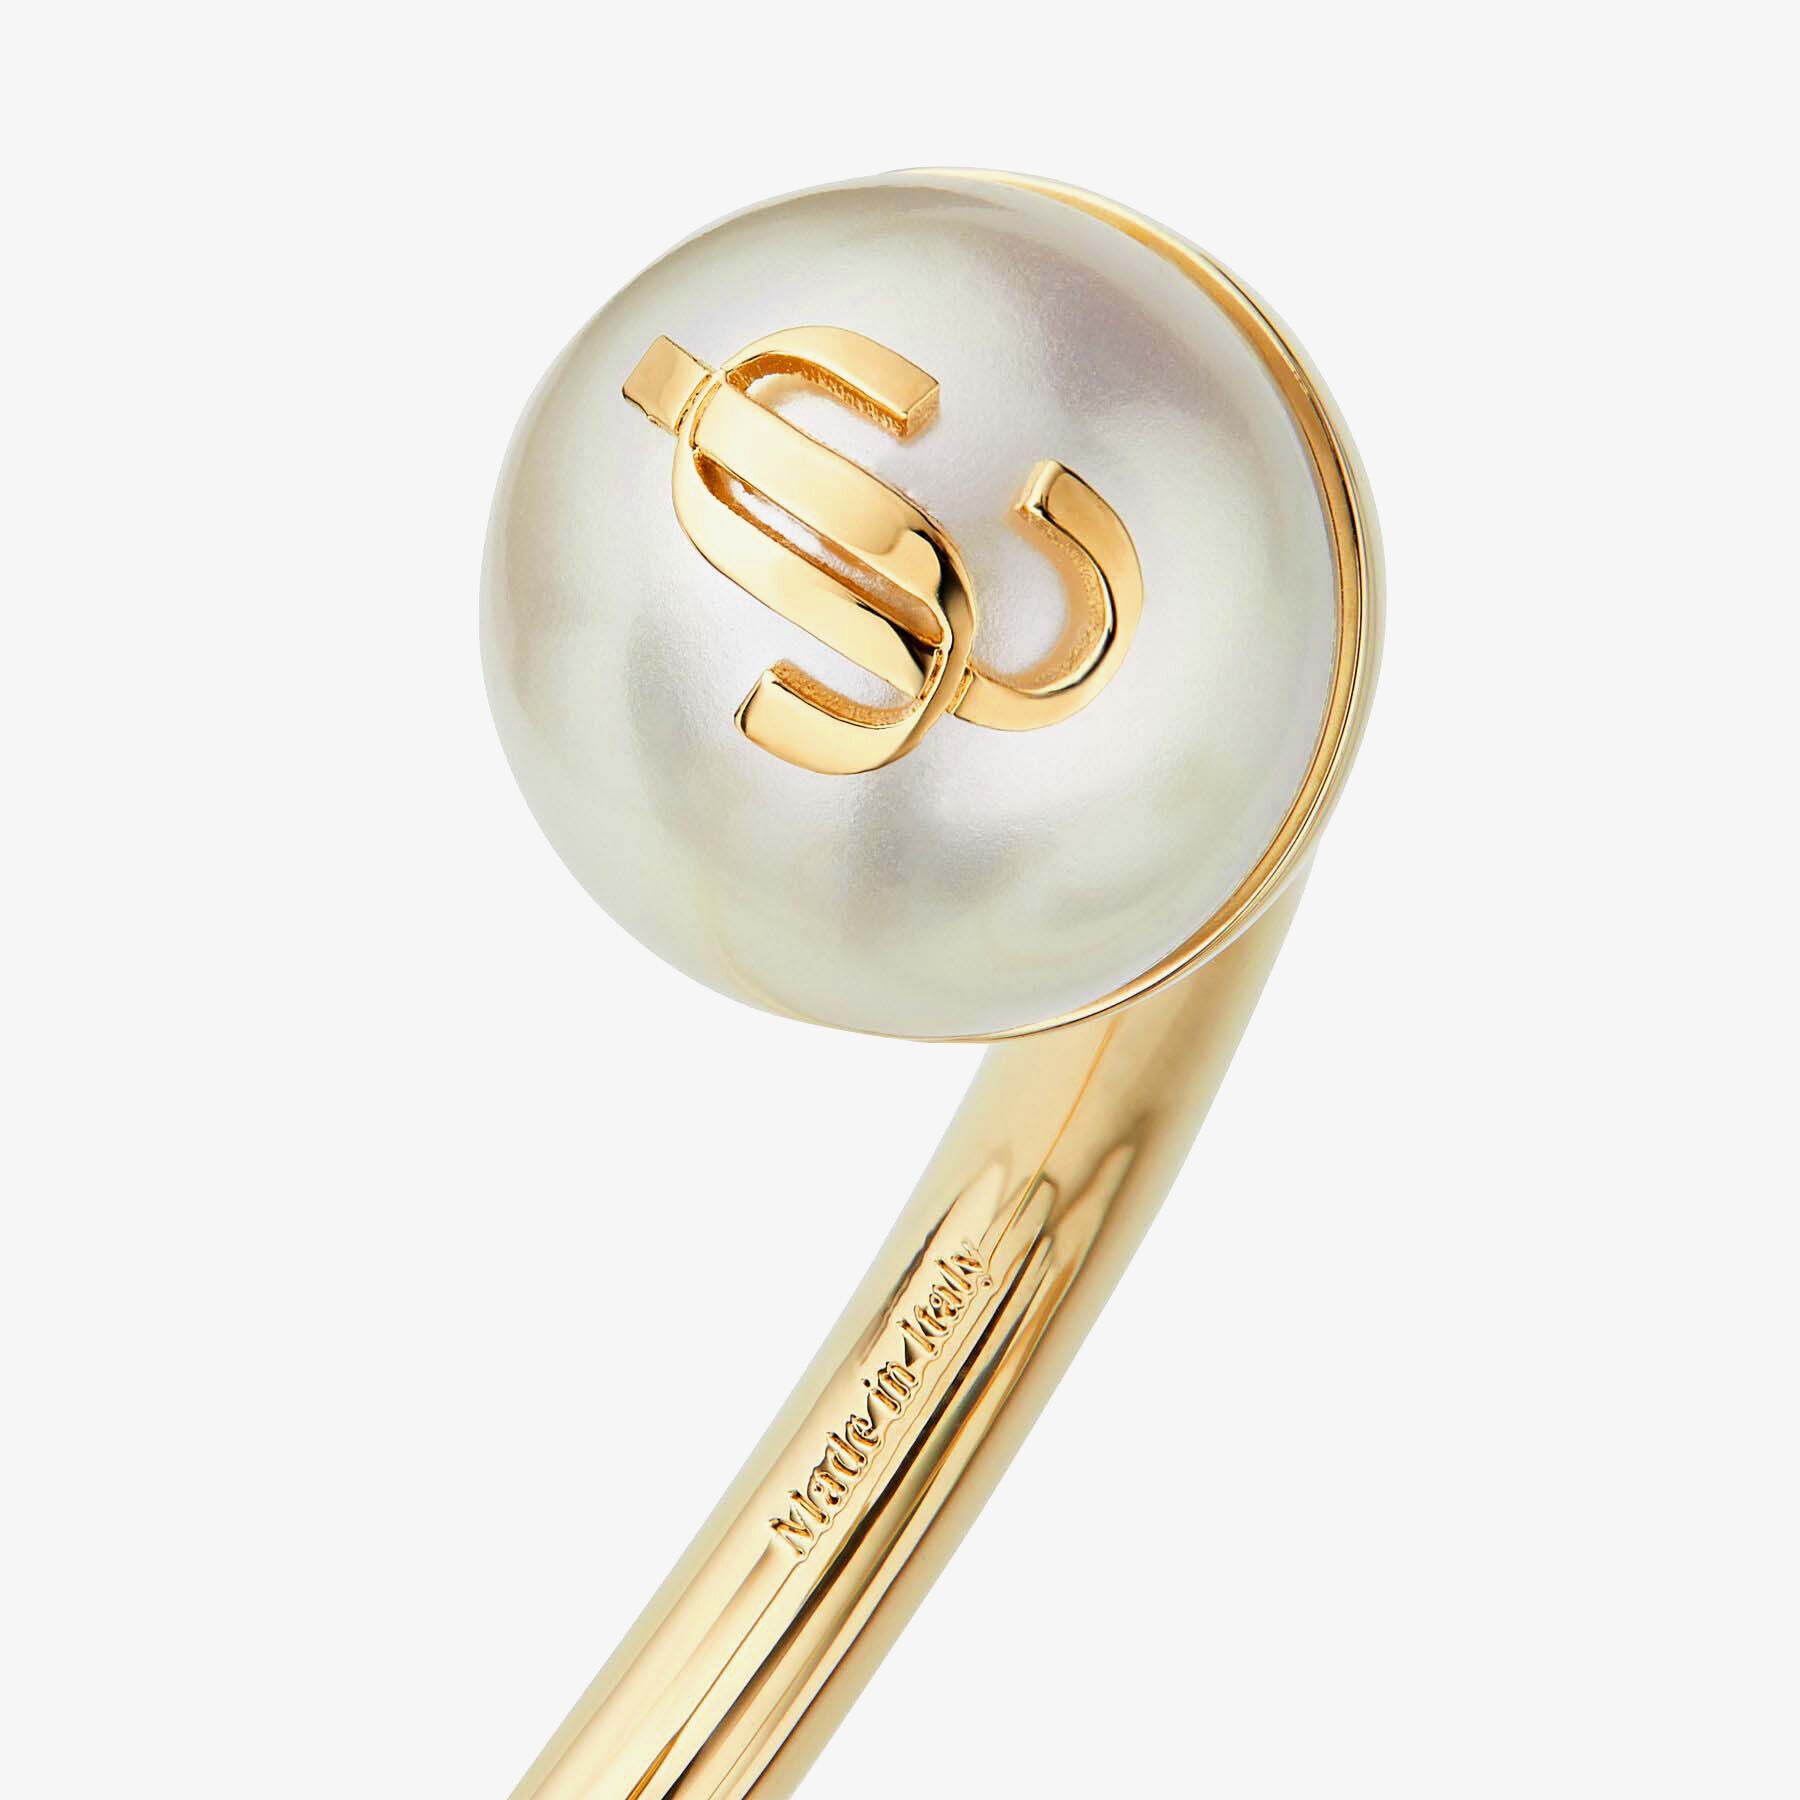 JC Pearl Cuff
Gold-Finish Metal Cuff Bracelet with Pearls - 3